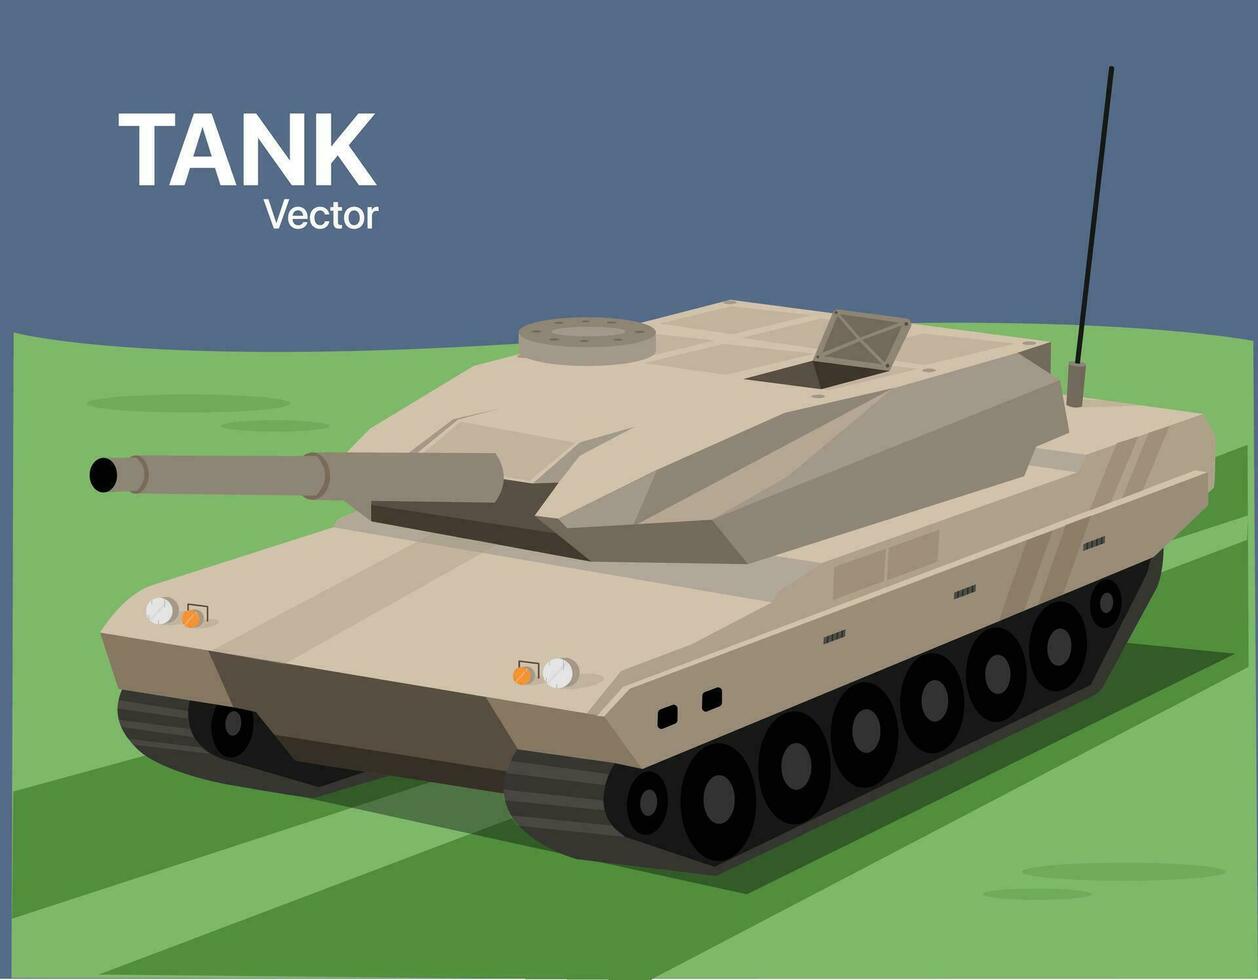 Tank military vehicle vector